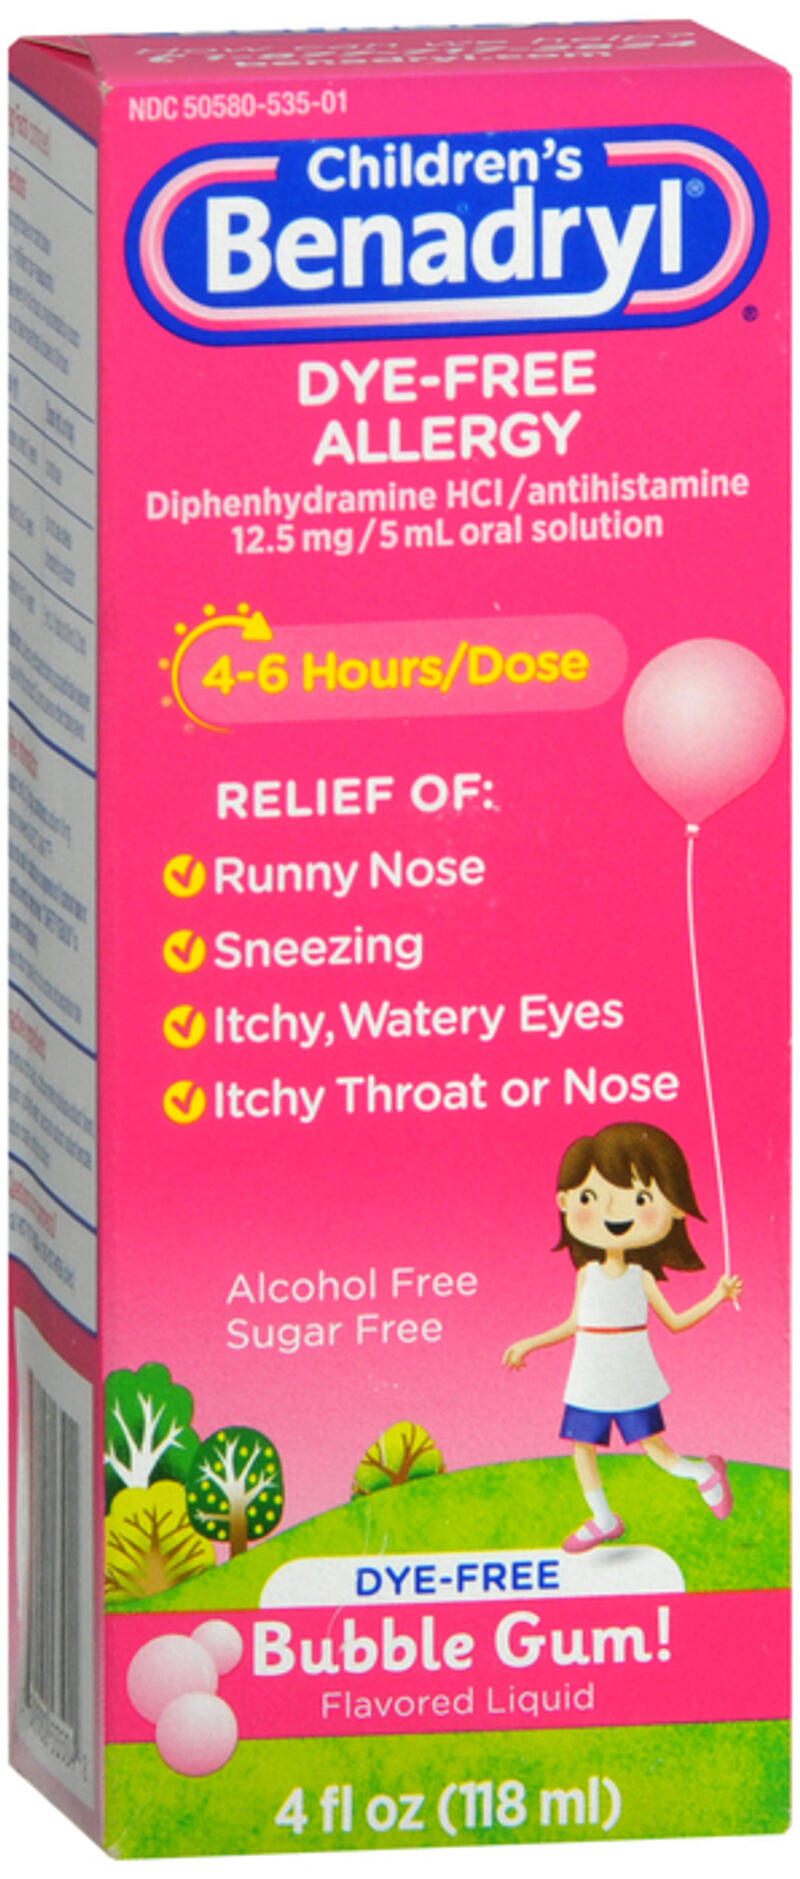 Benadryl Children Allergy Bubble Gum 4oz: $35.00